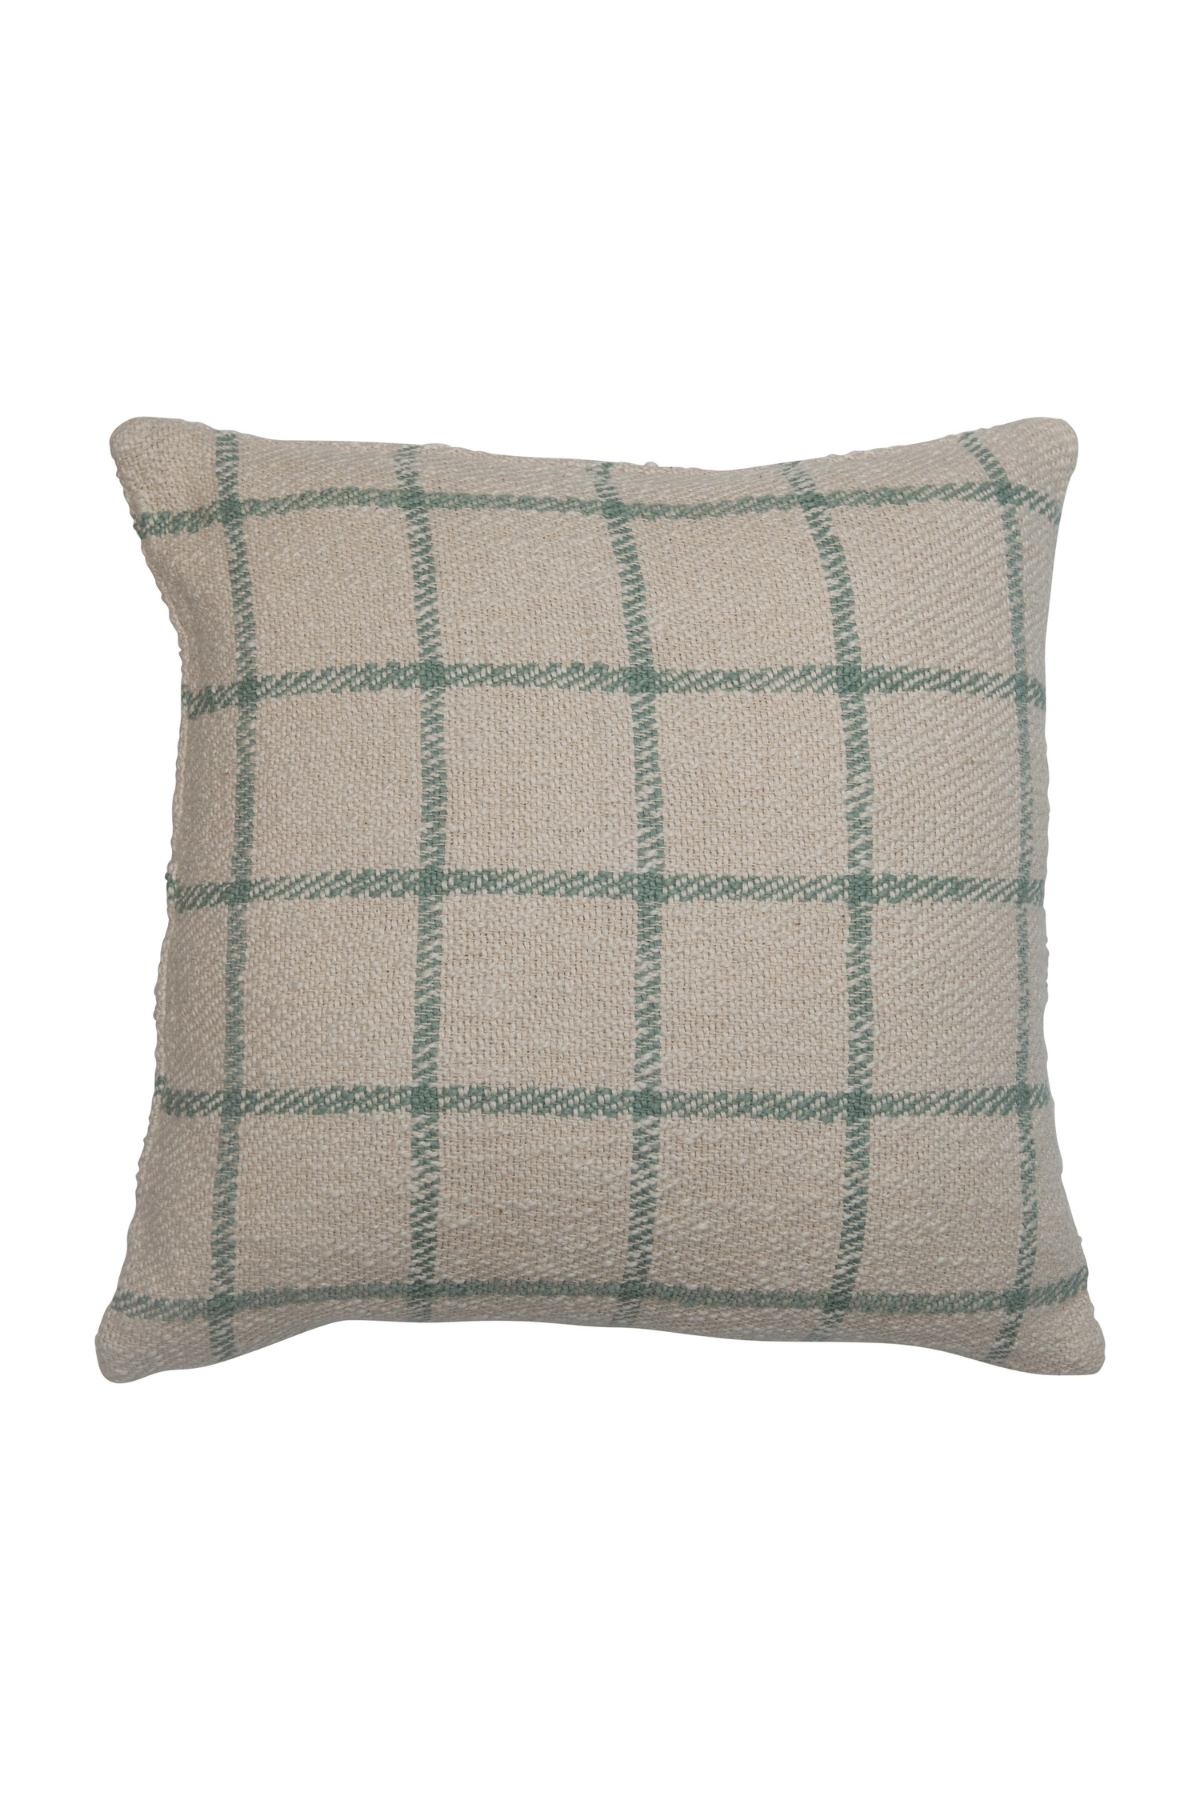 20" Woven Cotton Plaid Pillow